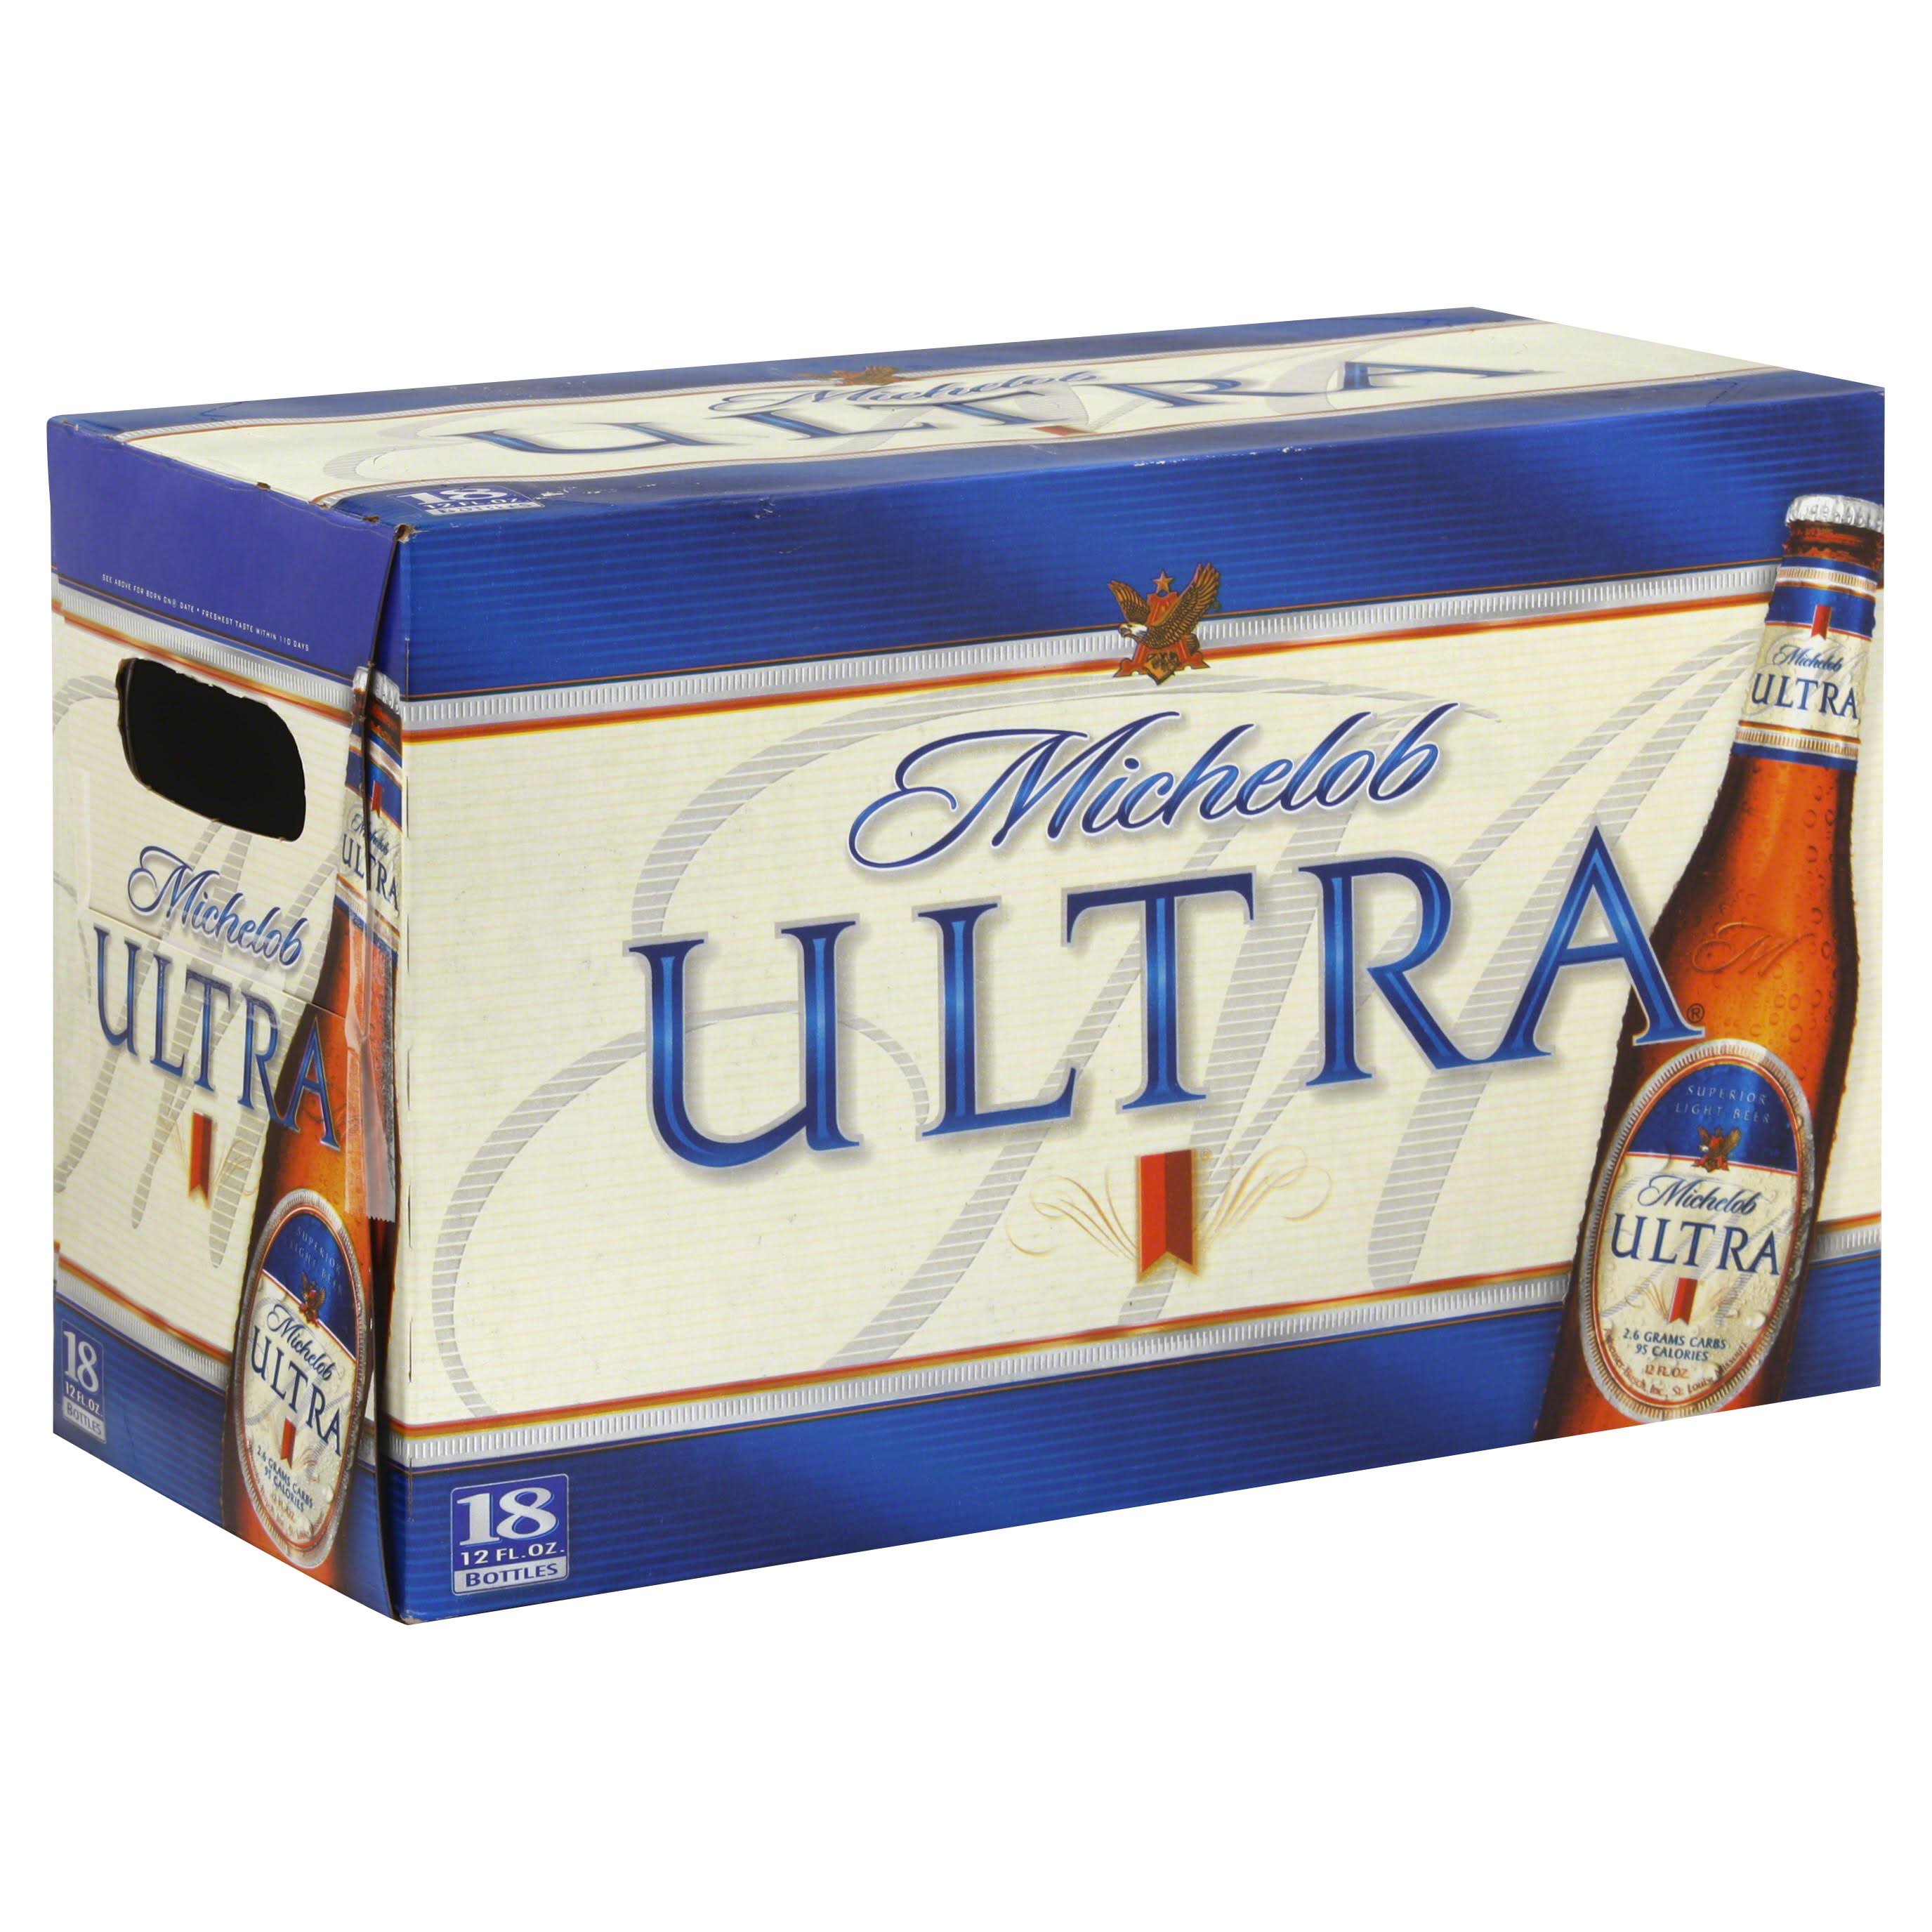 Michelob Ultra Superior Light Beer - 18 Bottles